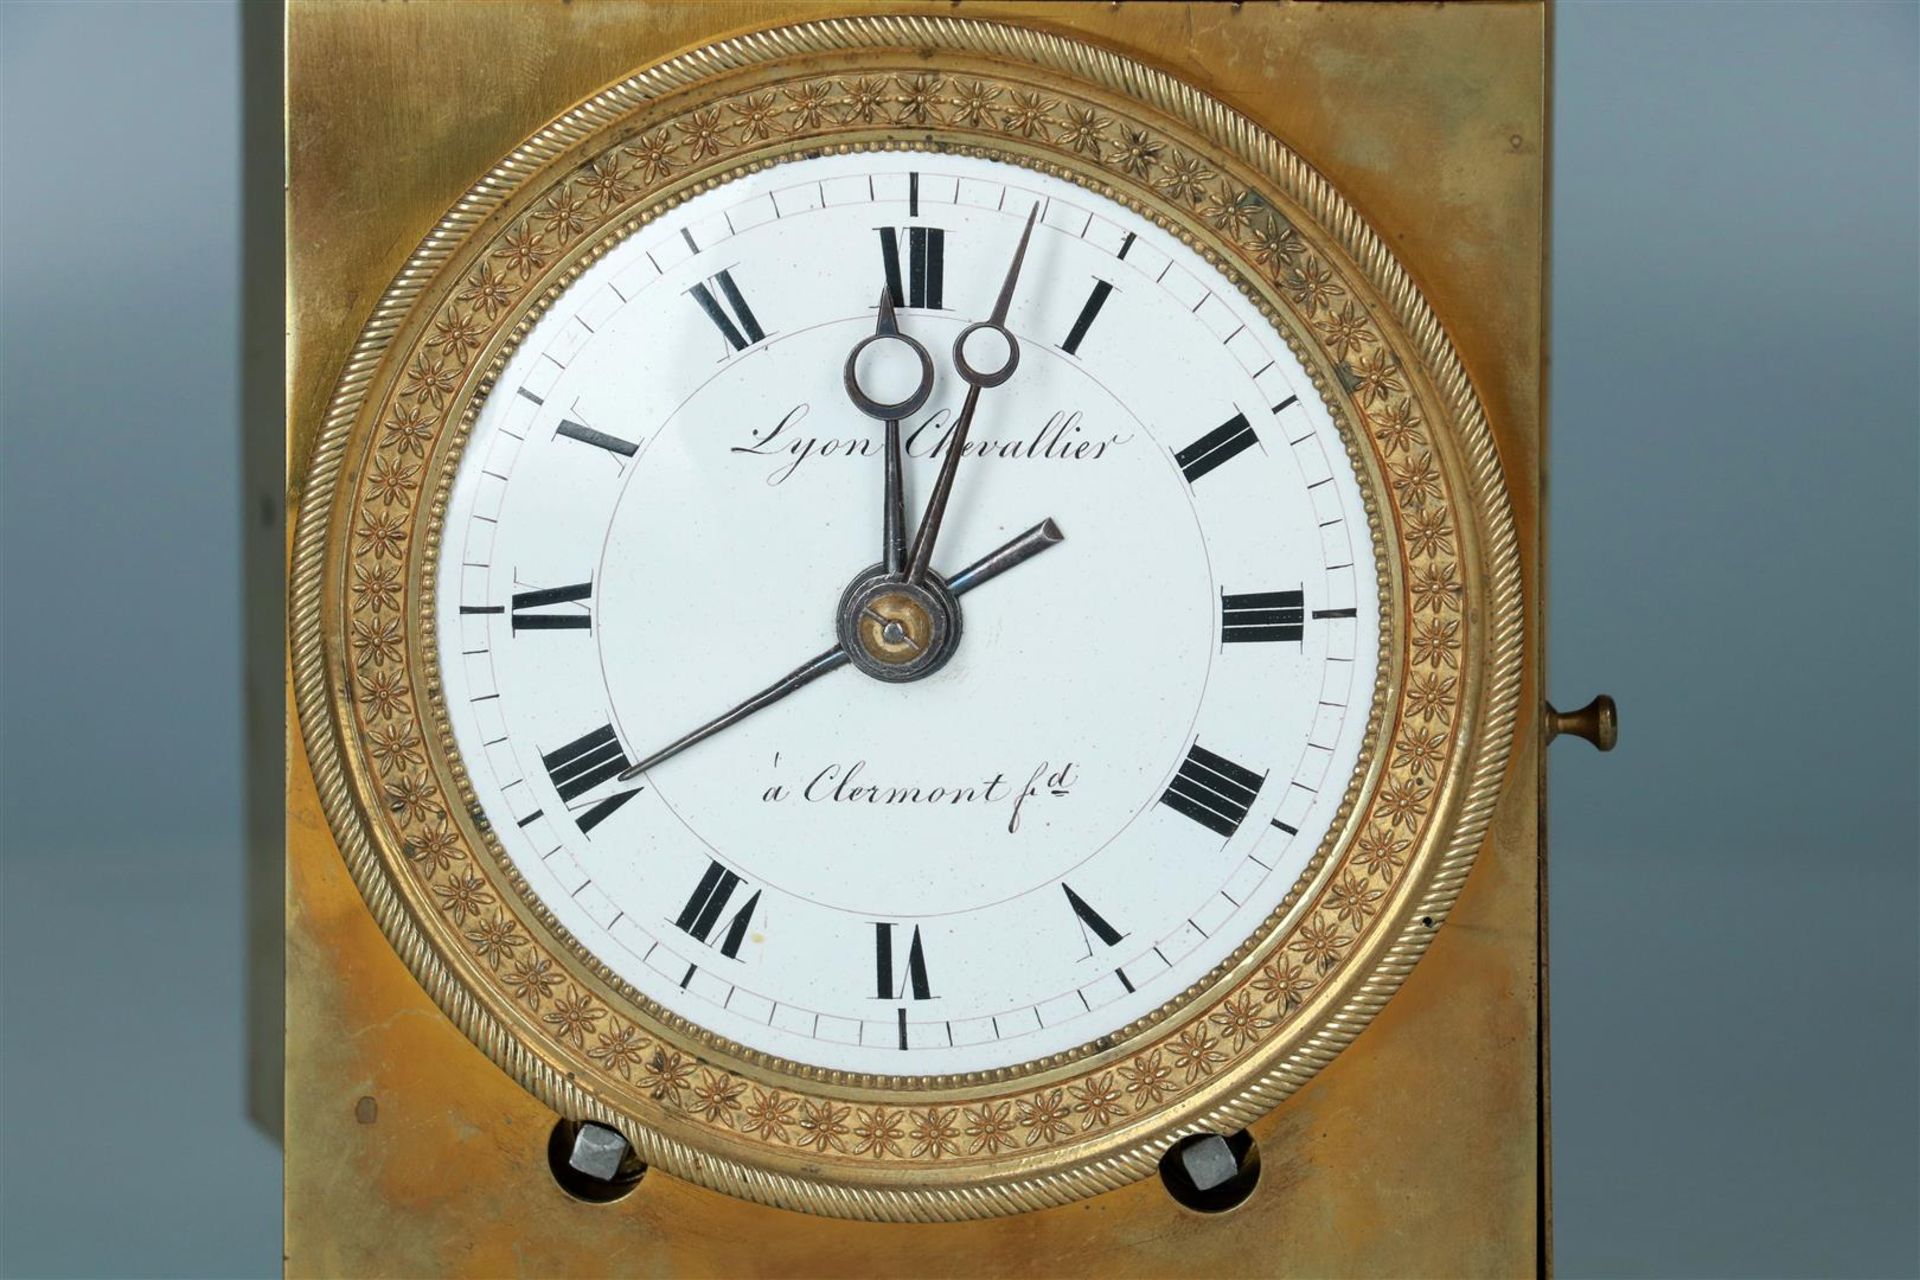 Capucine travel clock, Lyon Chevallier à Clermont ferrand. Around 1820. - Image 6 of 6